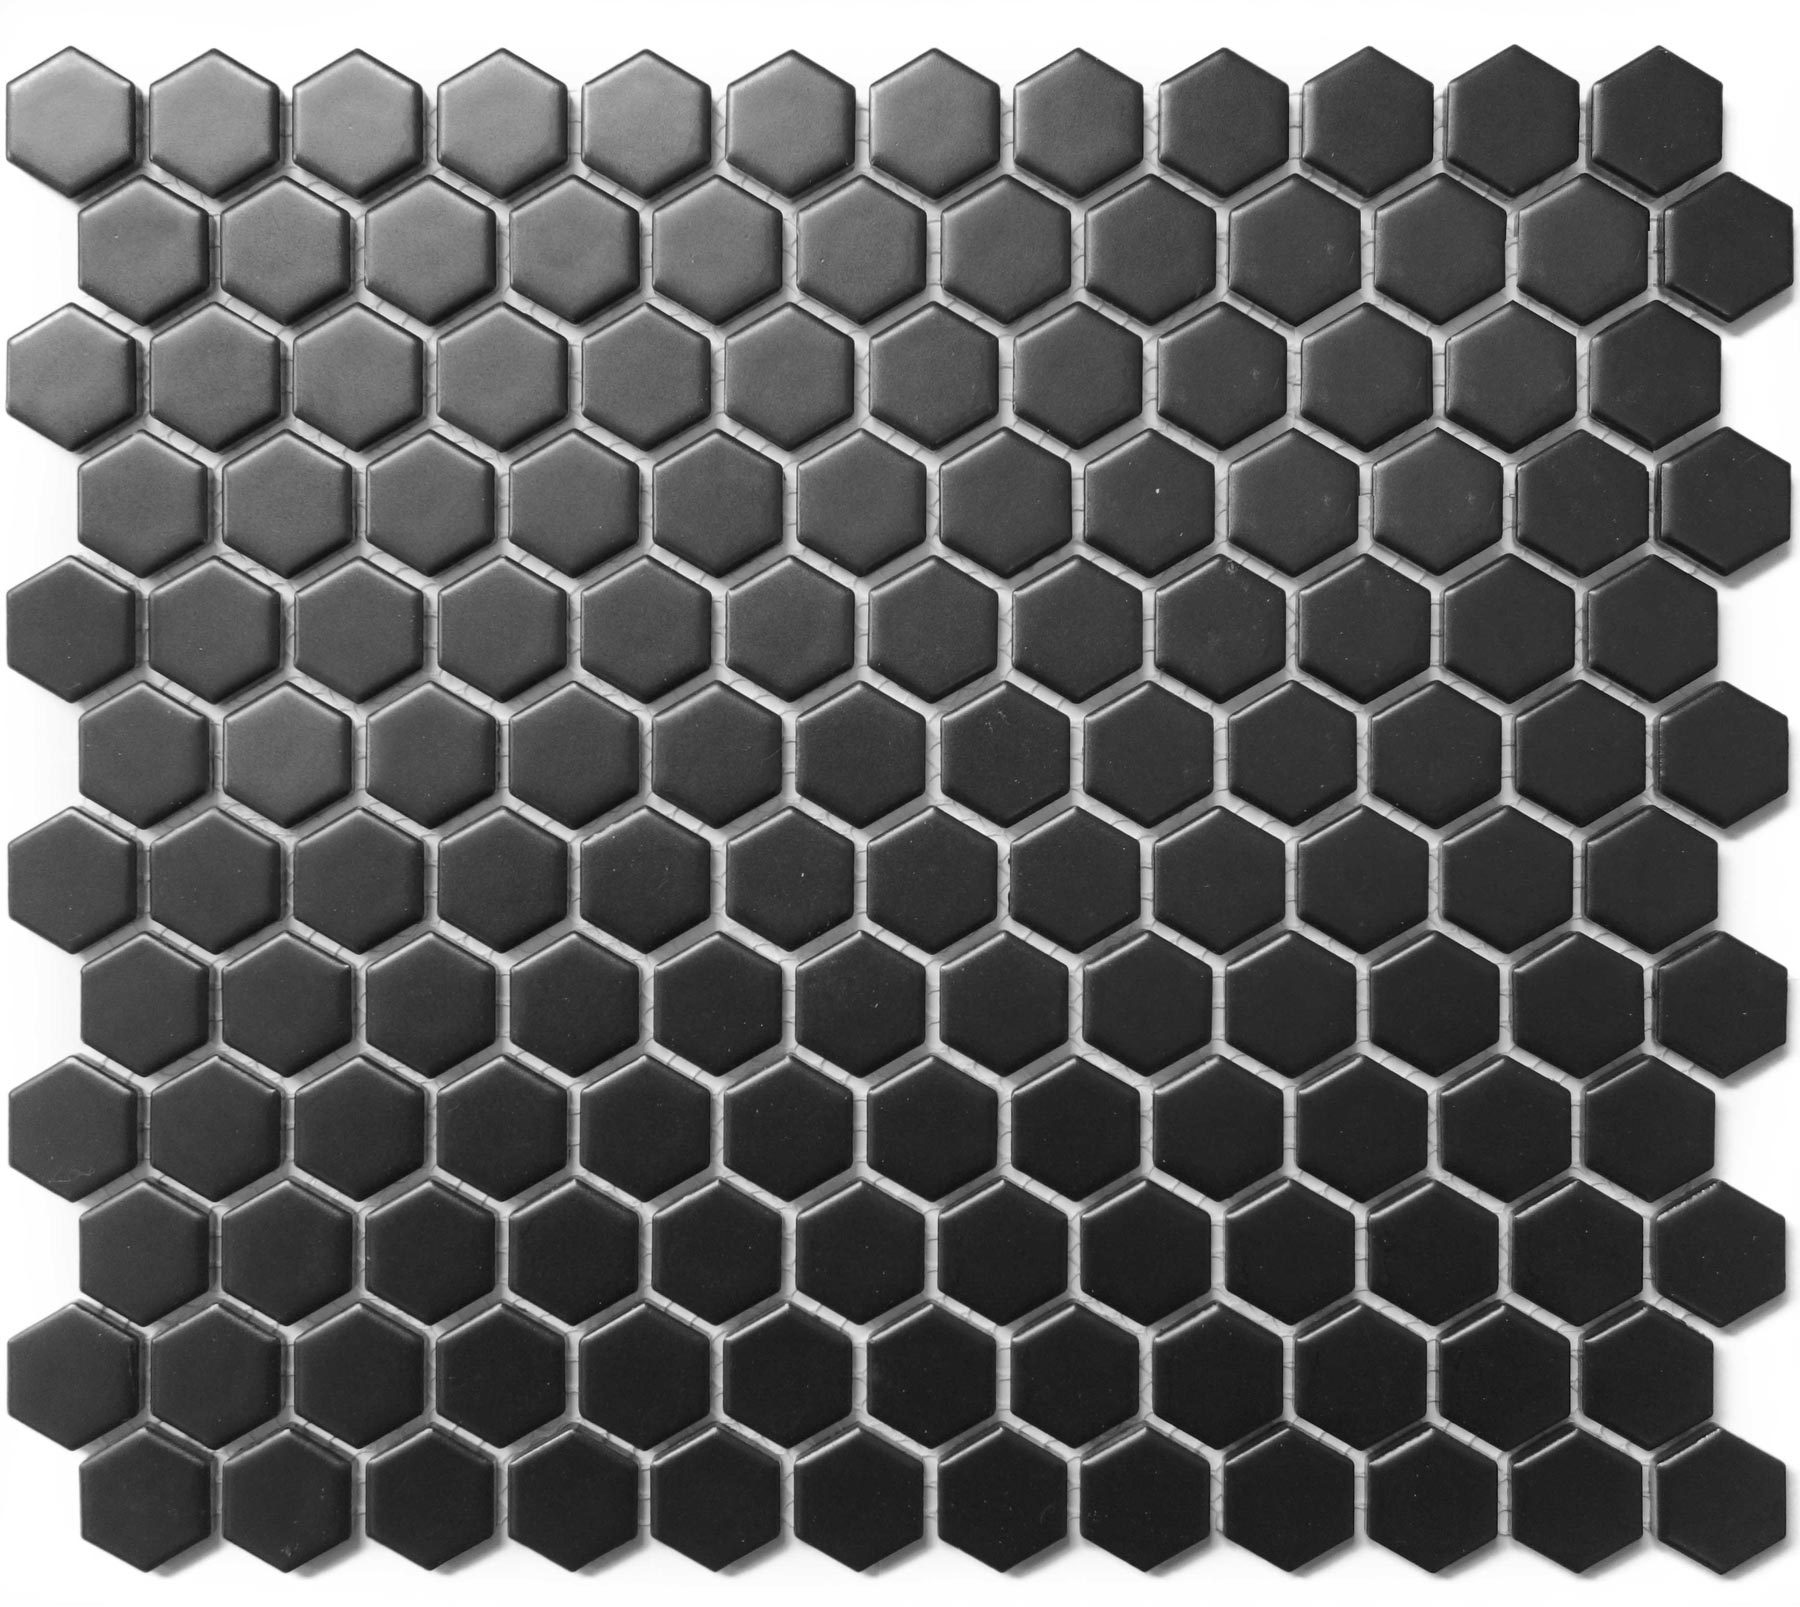 Hexagon 1 in. Black Matte Porcelain Mosaic Floor Wall Tile for Bathroom Shower, Kitchen Backsplashes, Pool Tile (Box of 10 Sheets)